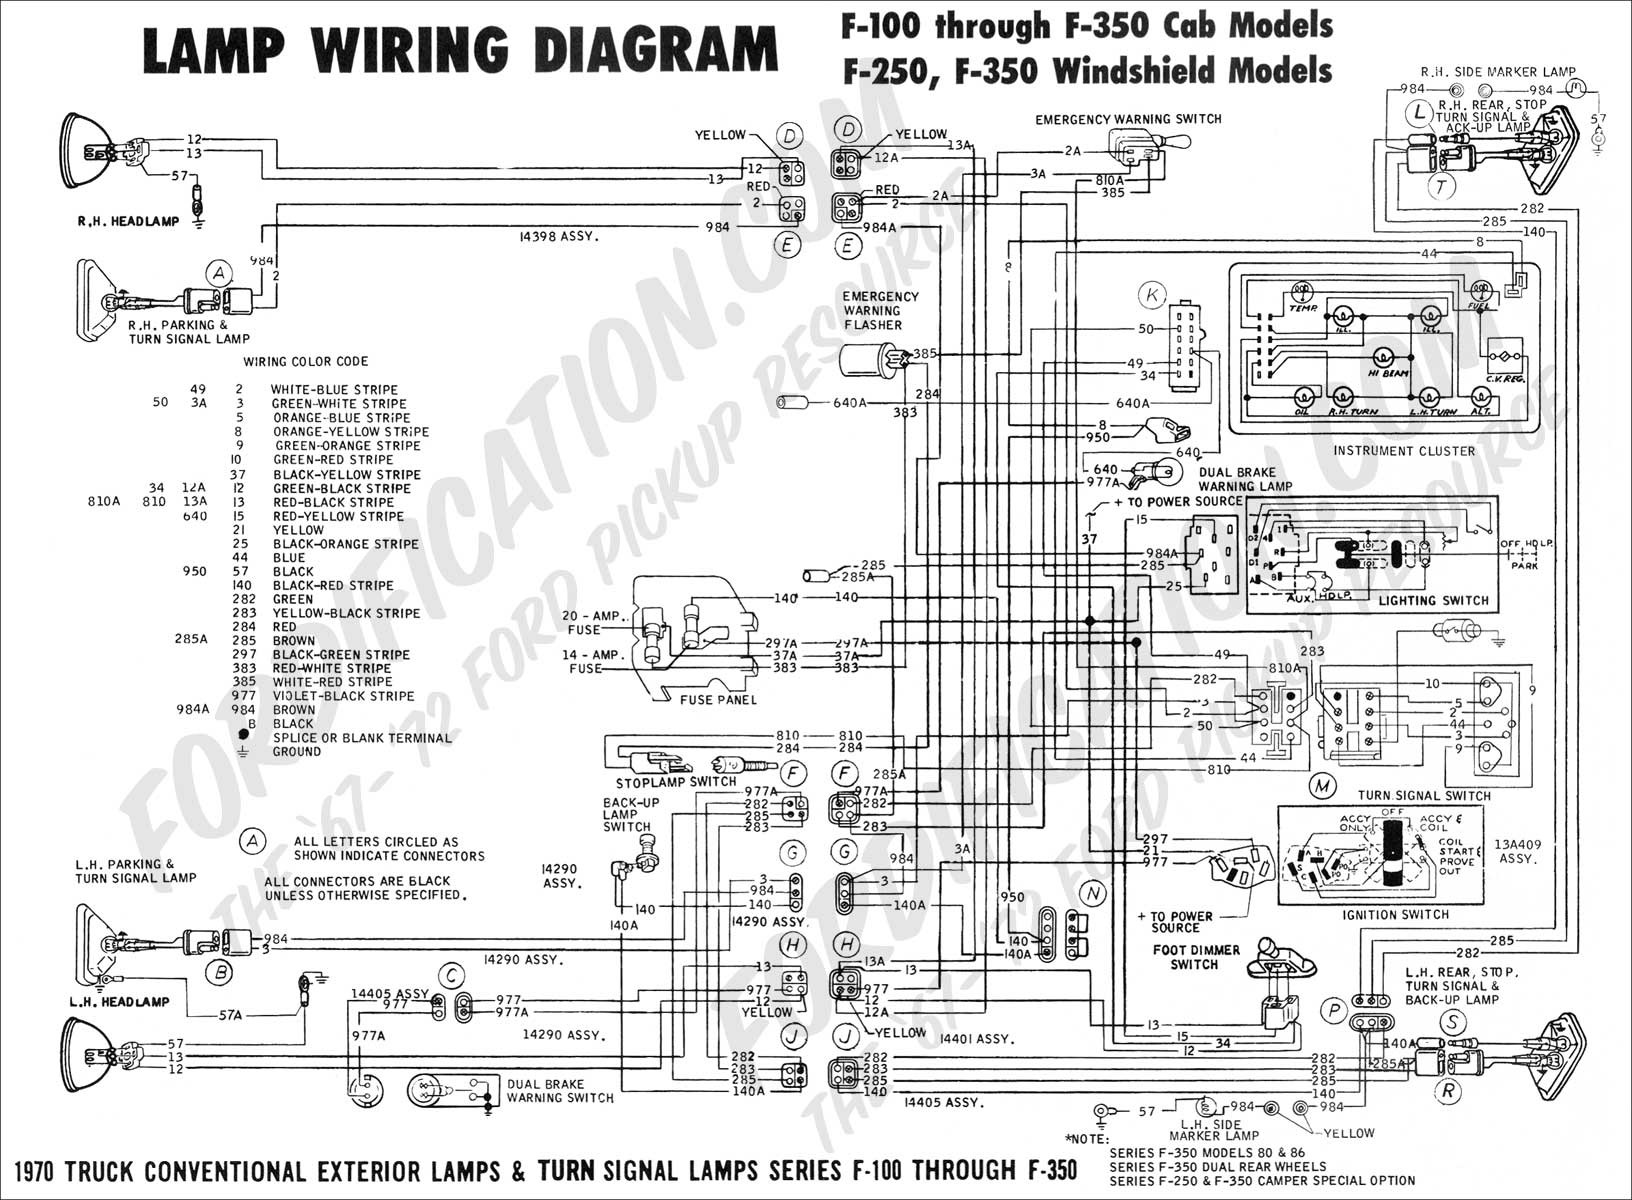 1991 toyota Pickup Tail Light Wiring Diagram ford F 250 Diagram Wiring Diagram Of 1991 toyota Pickup Tail Light Wiring Diagram